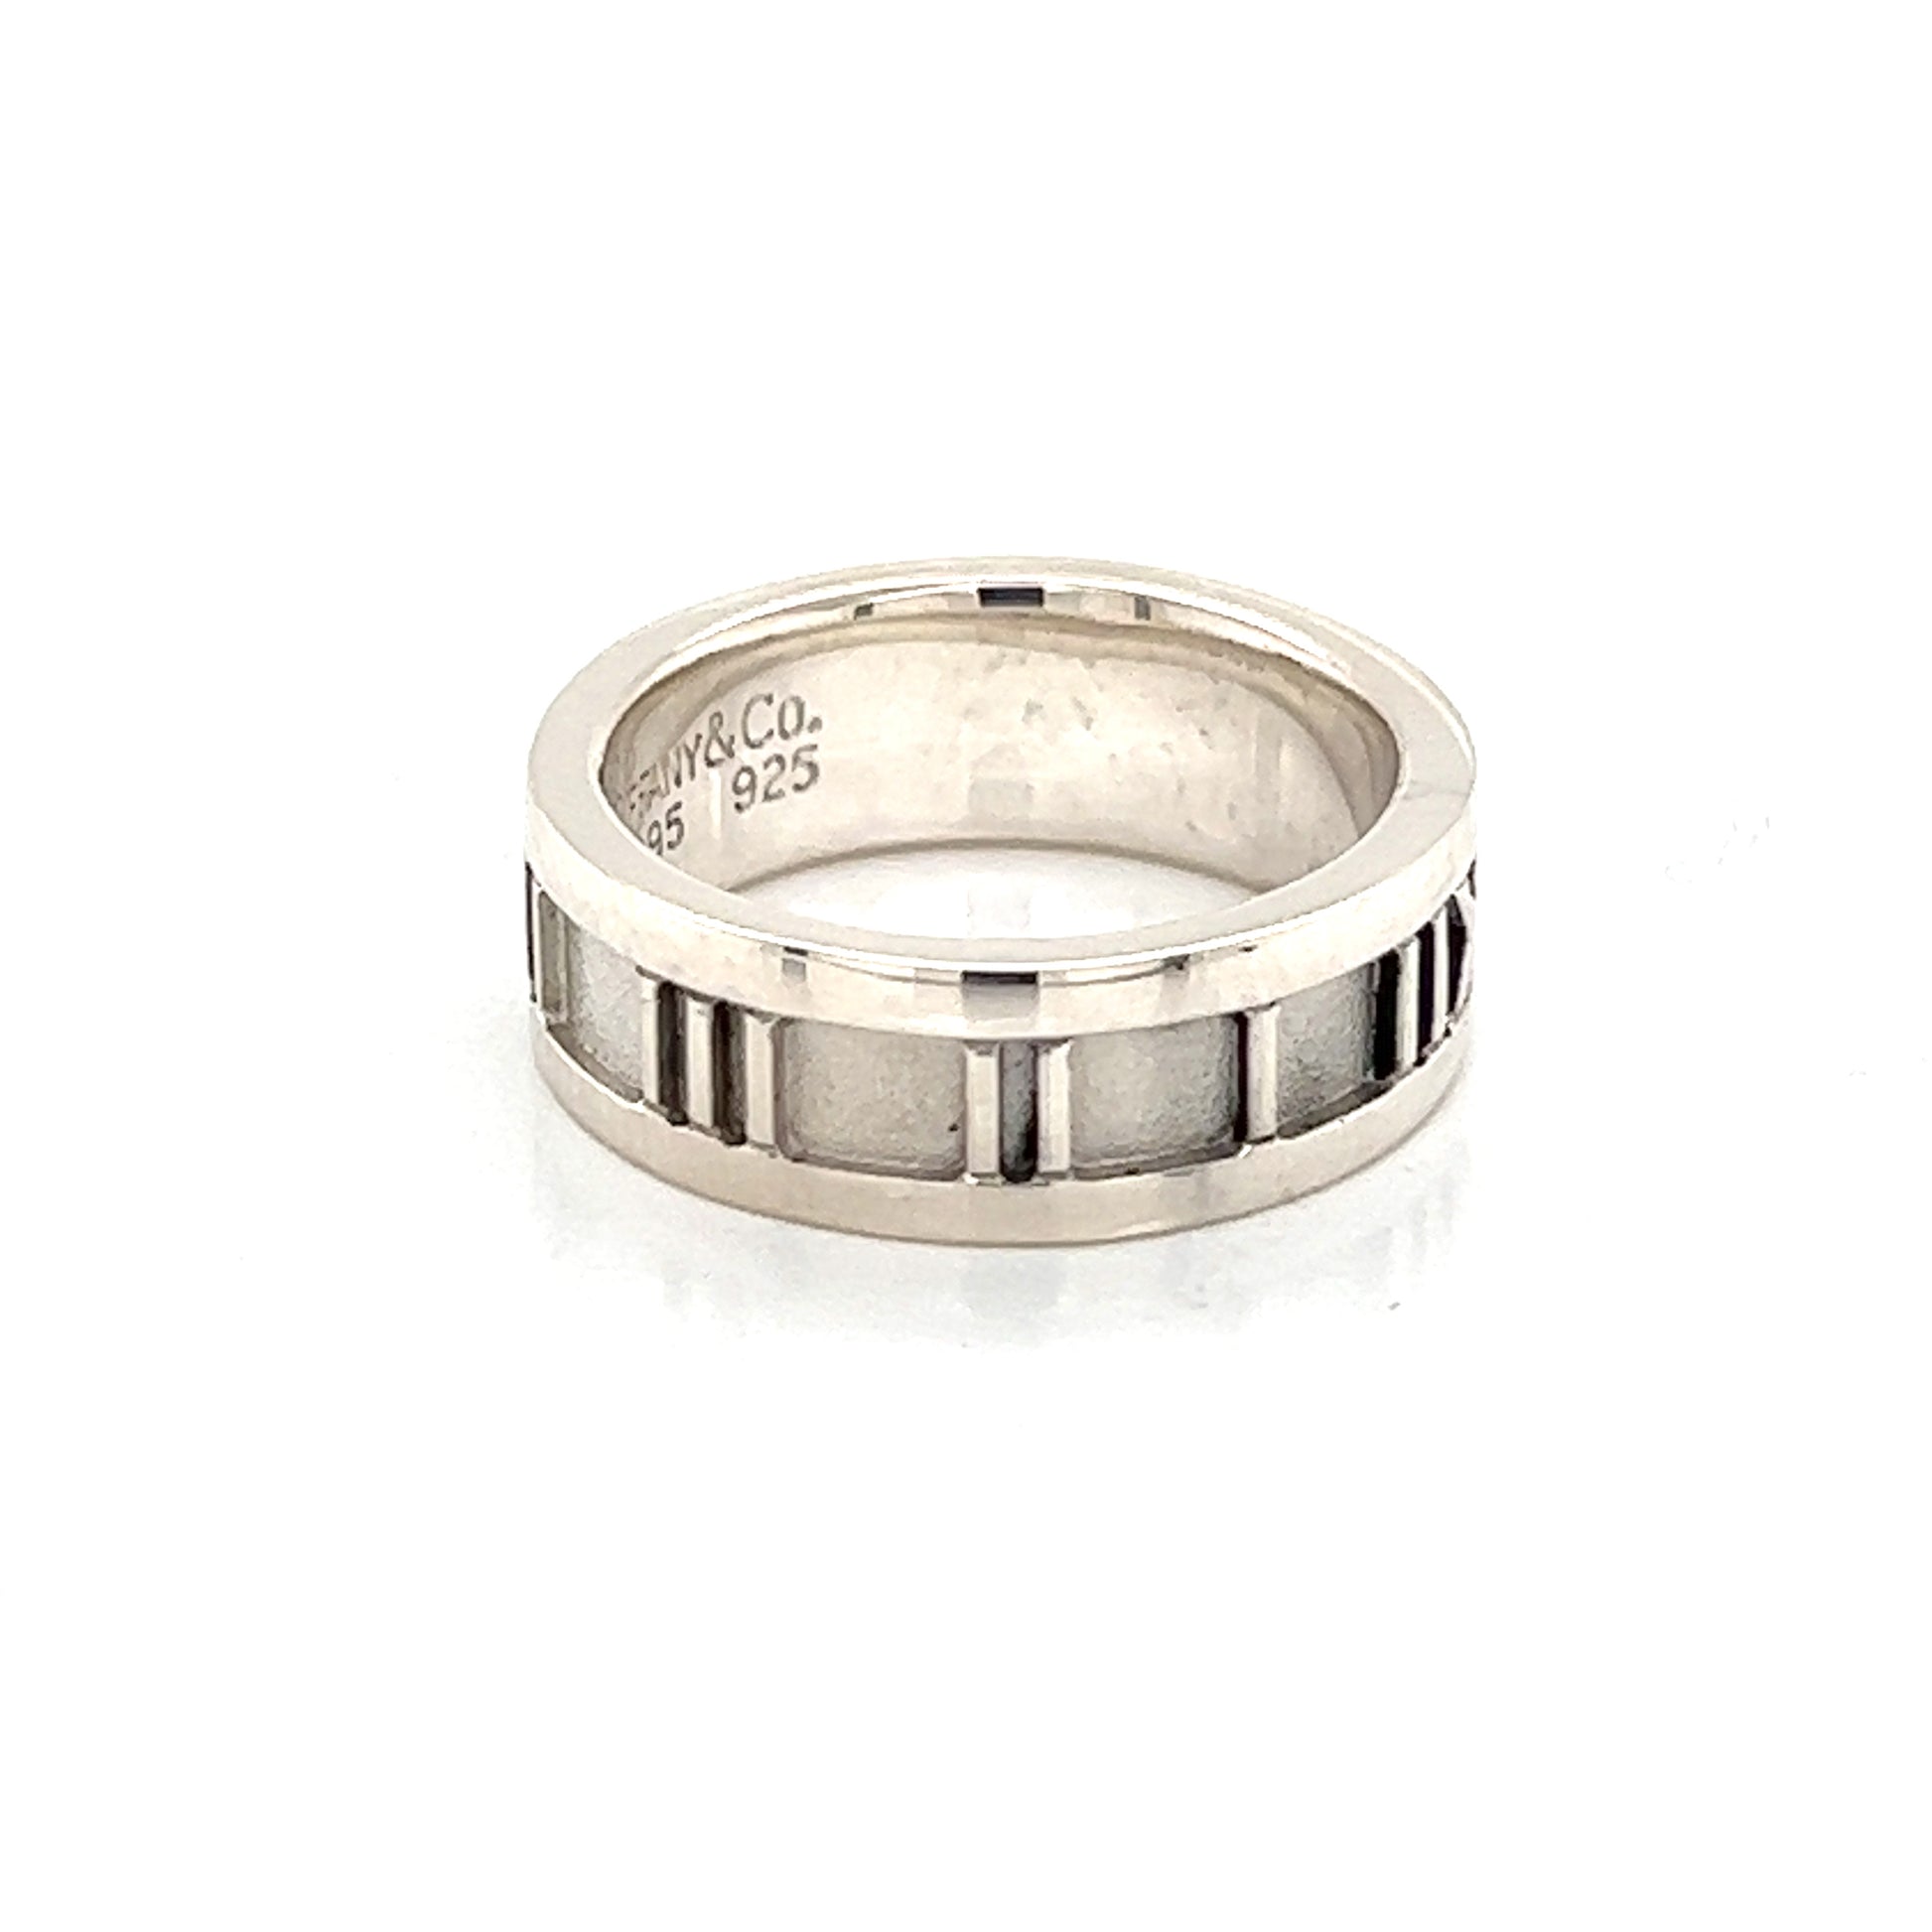 Tiffany & Co Estate Sterling Silver Ring Size 4.25, 5.2 Grams TIF182